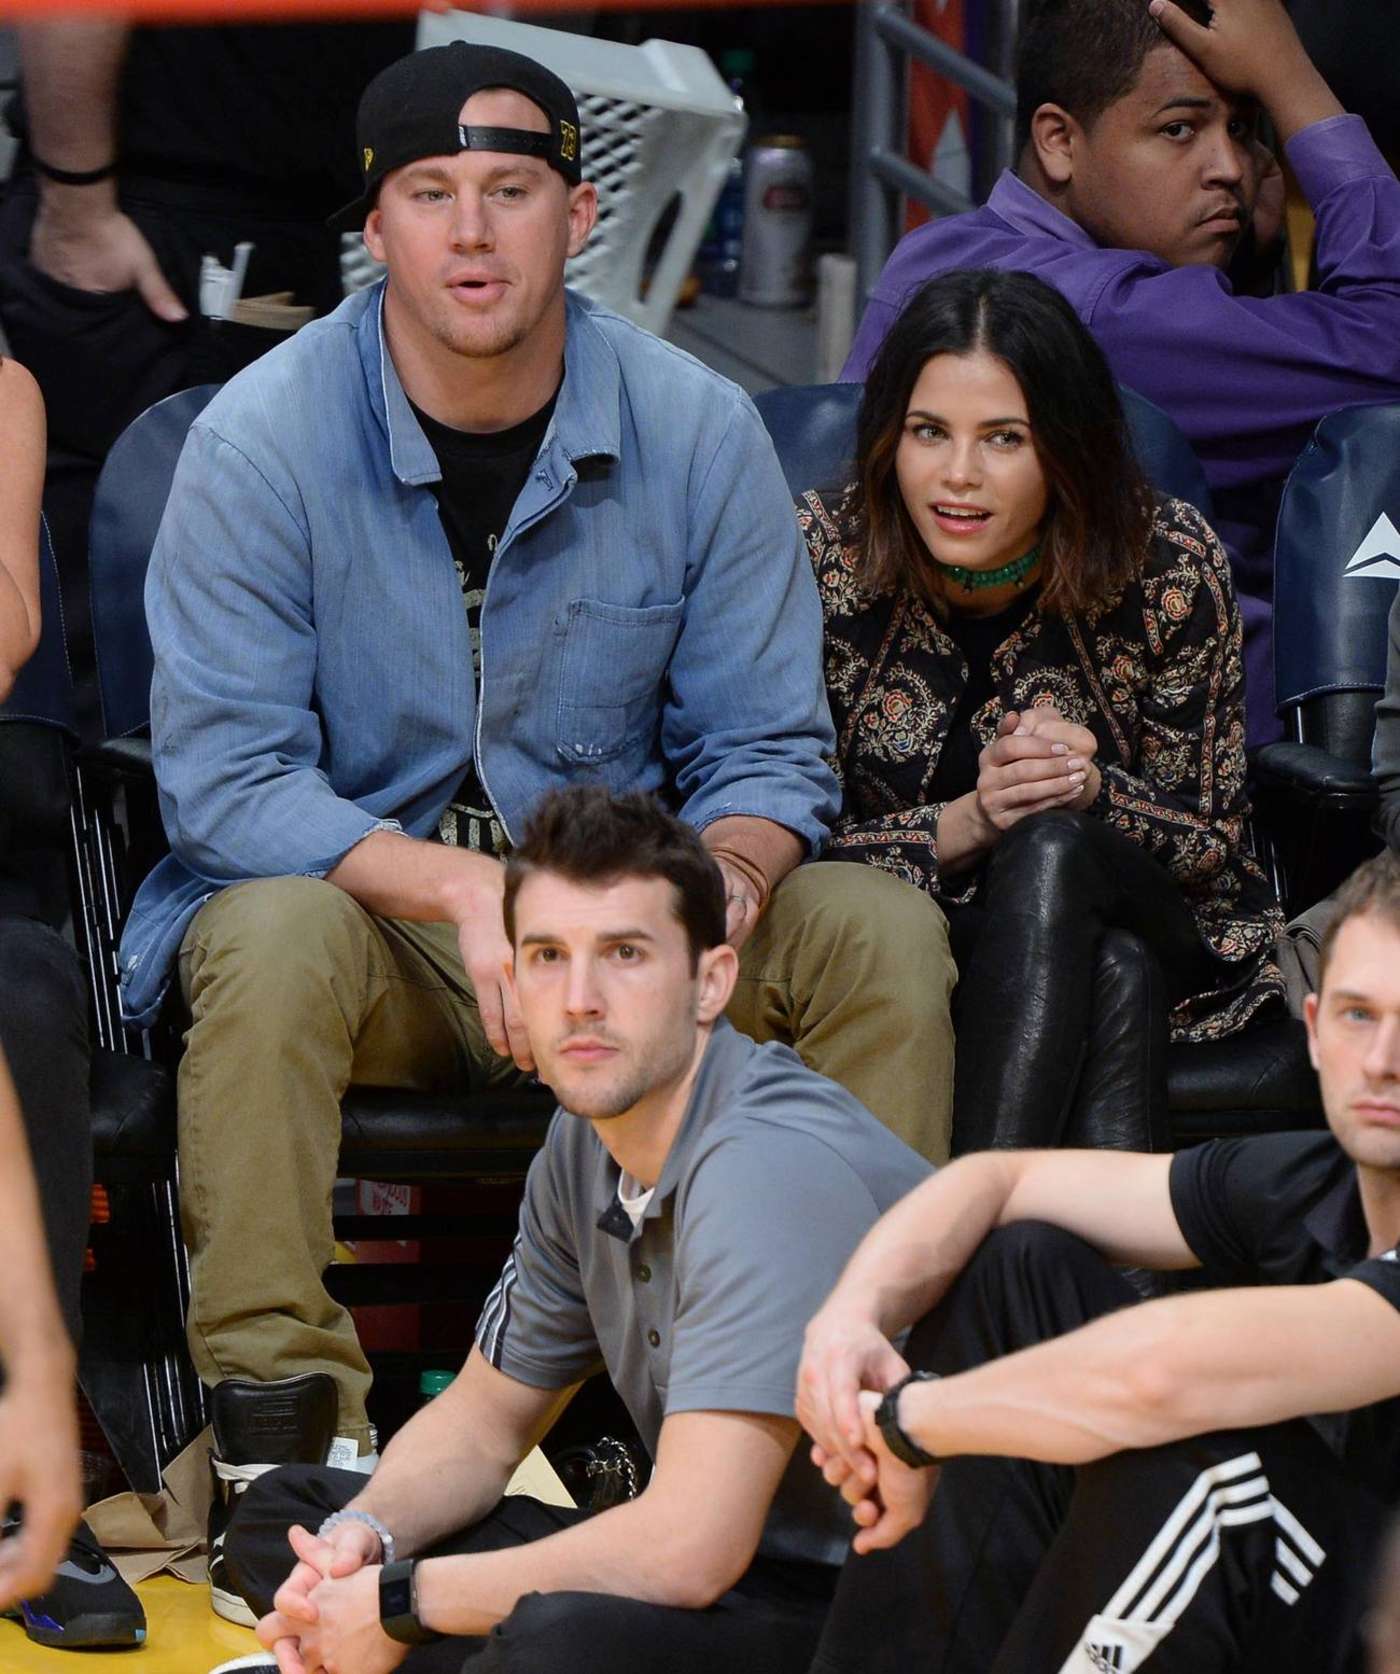 Jenna Dewan Tatum 2015 : Channing Tatum Jenna Dewan and Emmanuelle Chriqui Watch Lakers Game -15